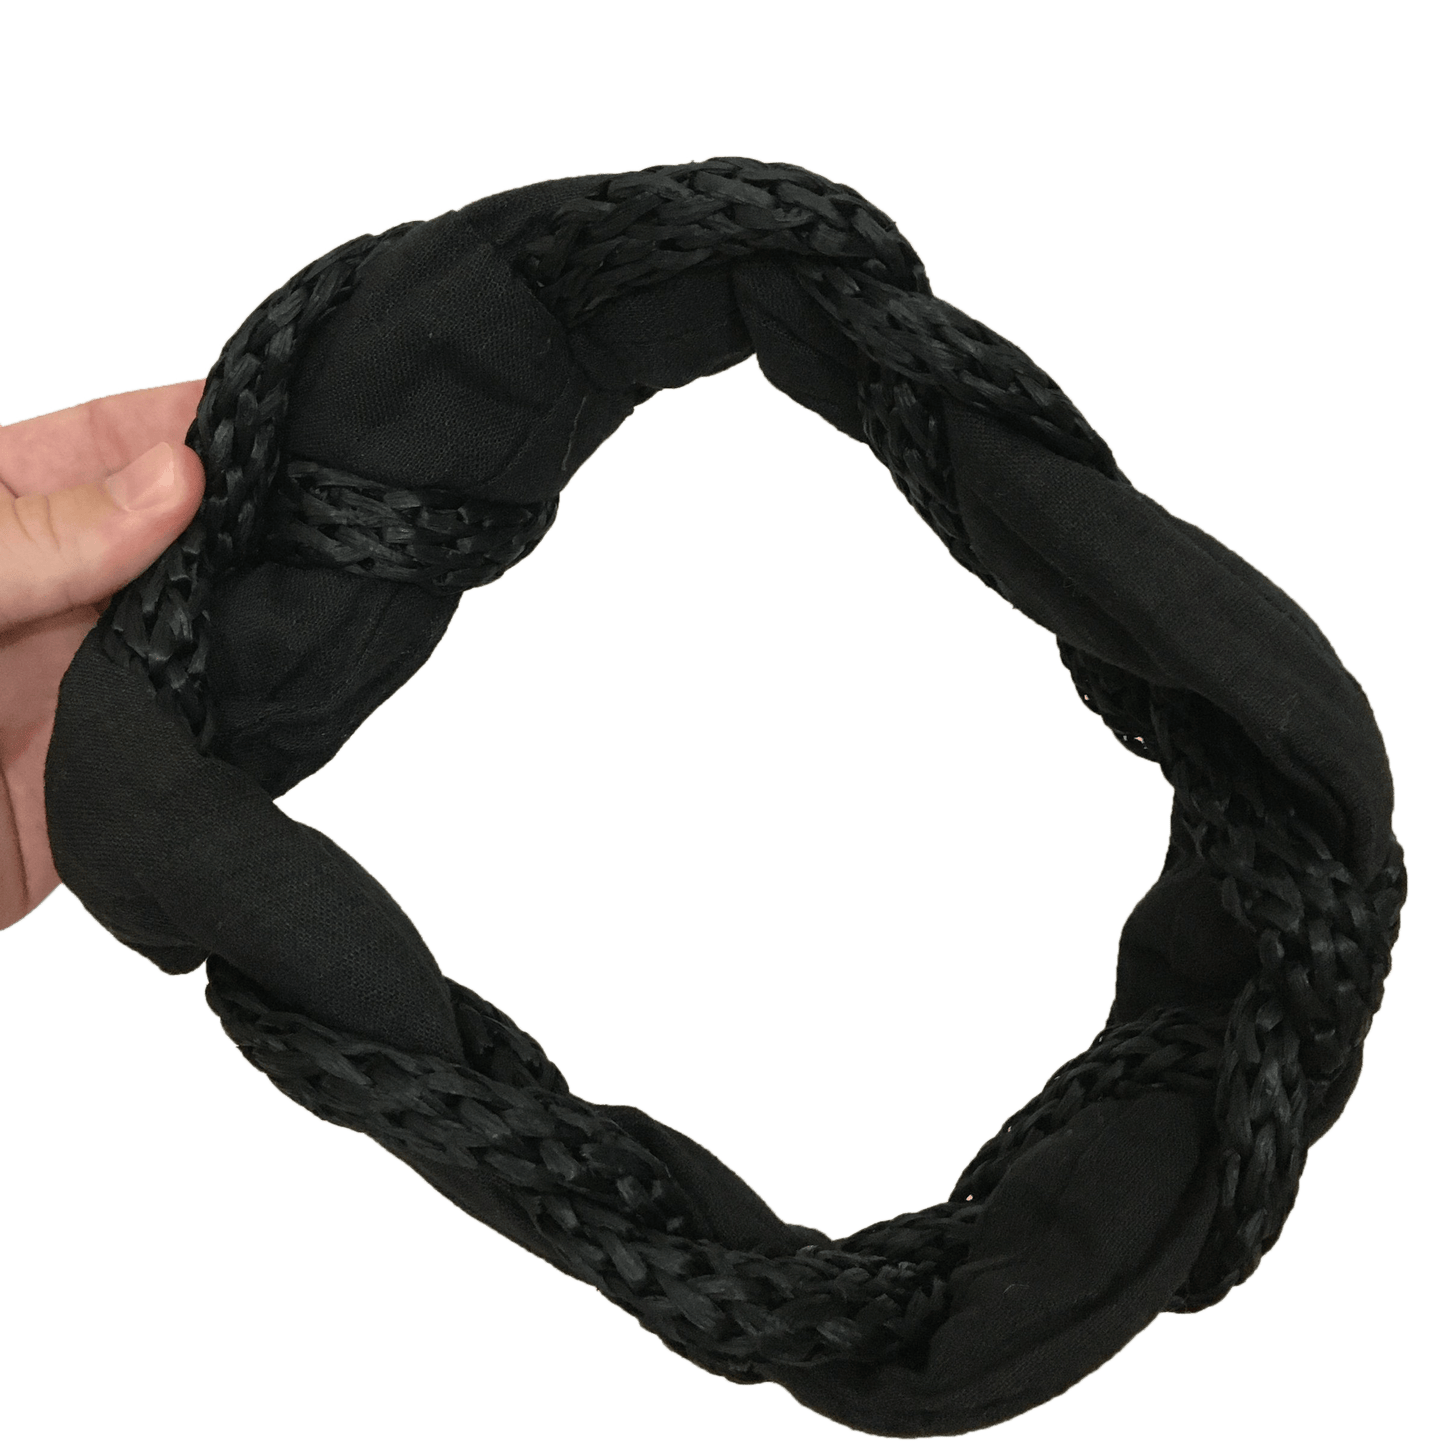 Women's Headband Black SKU 000100